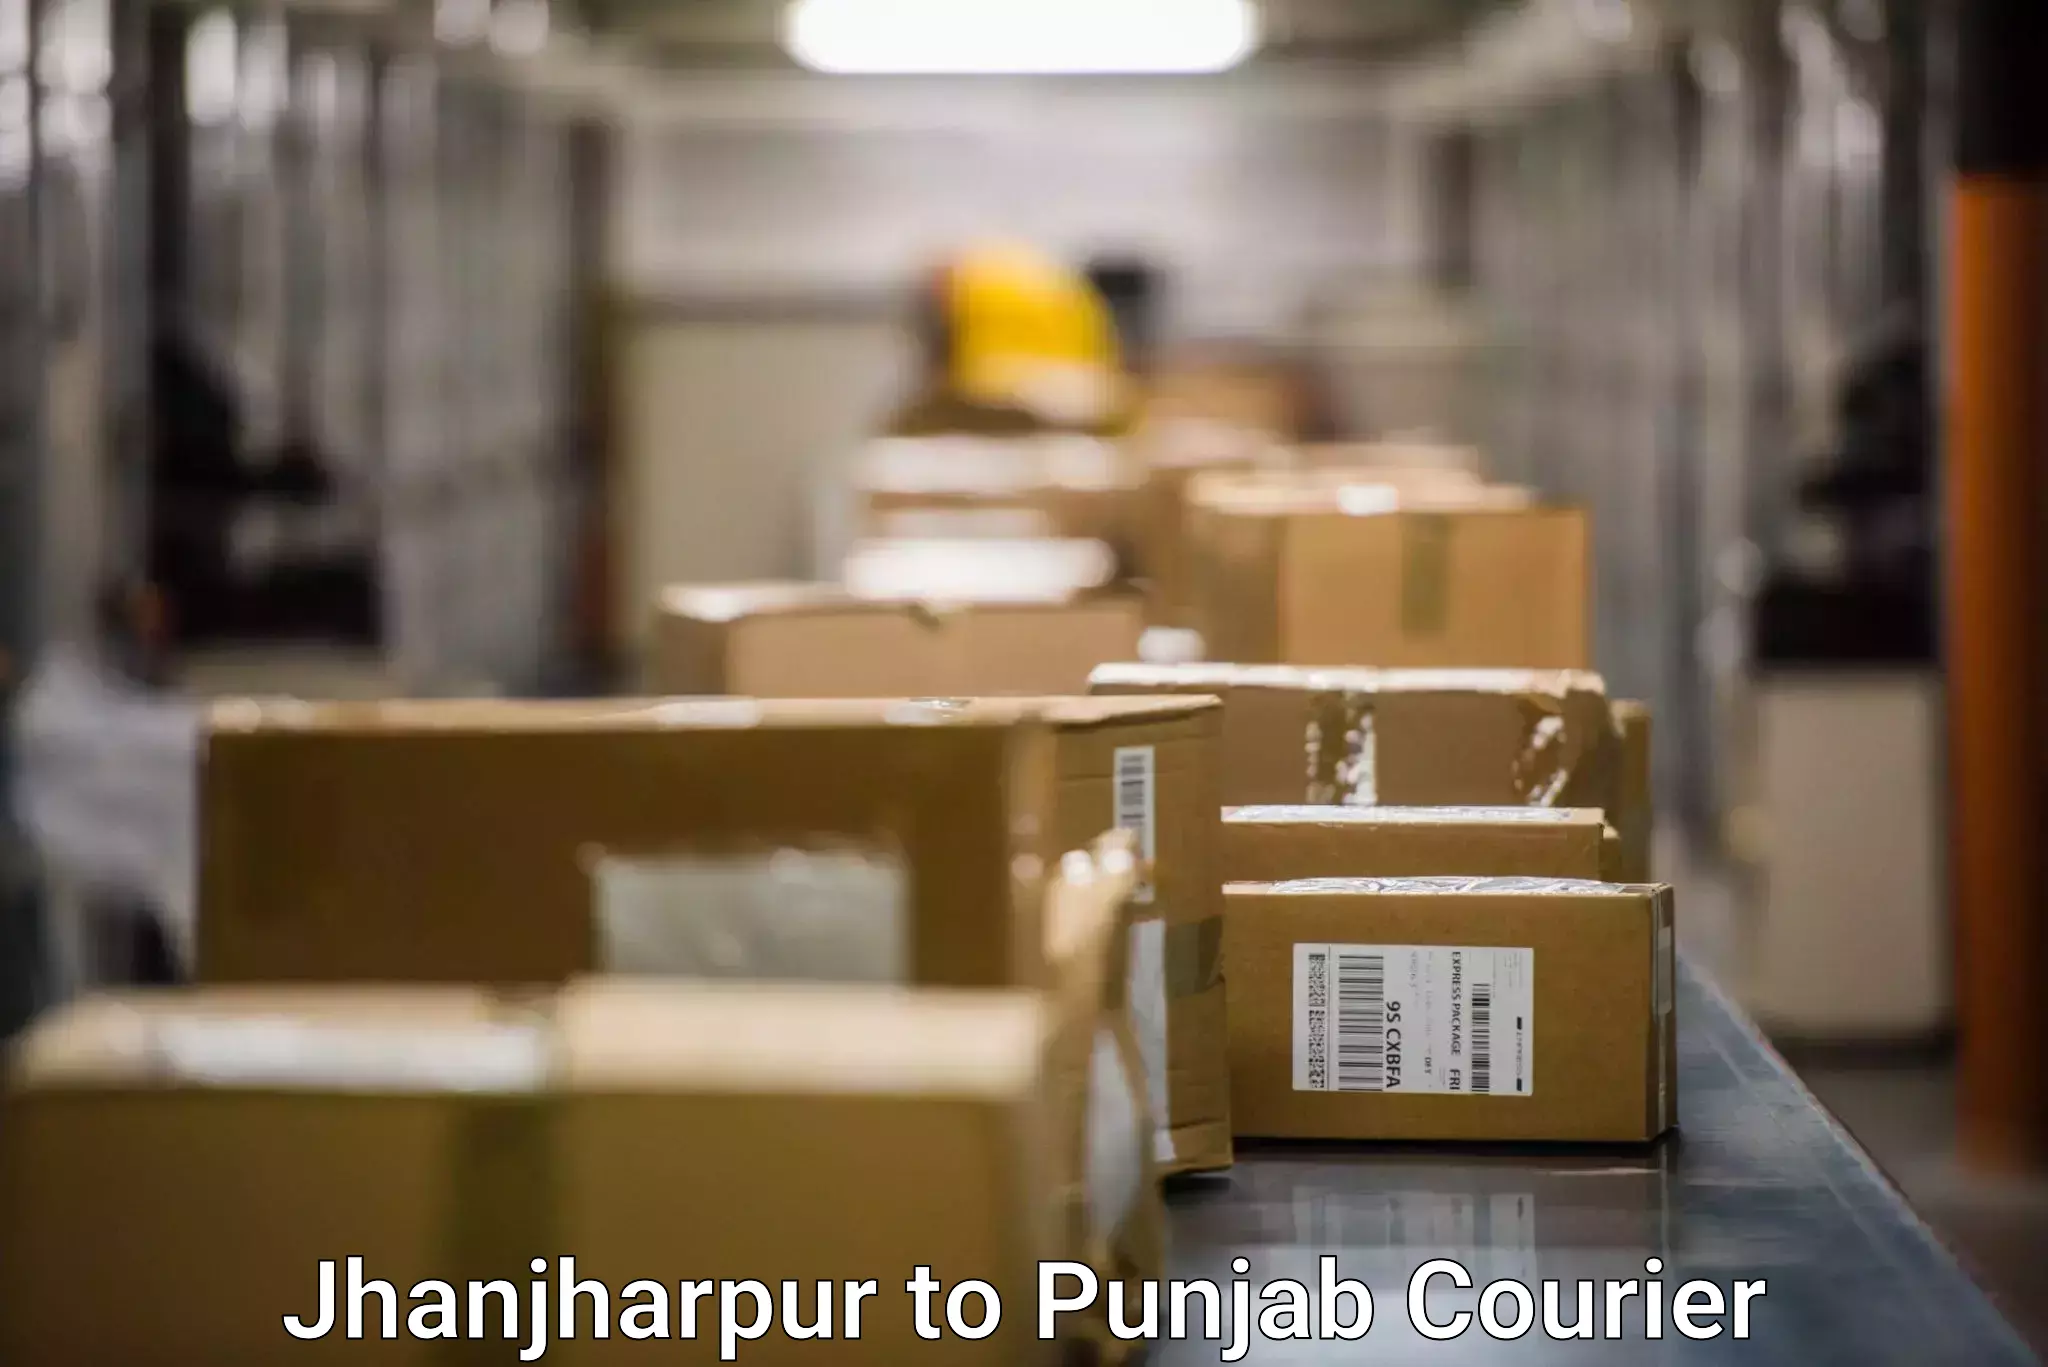 Shipping and handling Jhanjharpur to Punjab